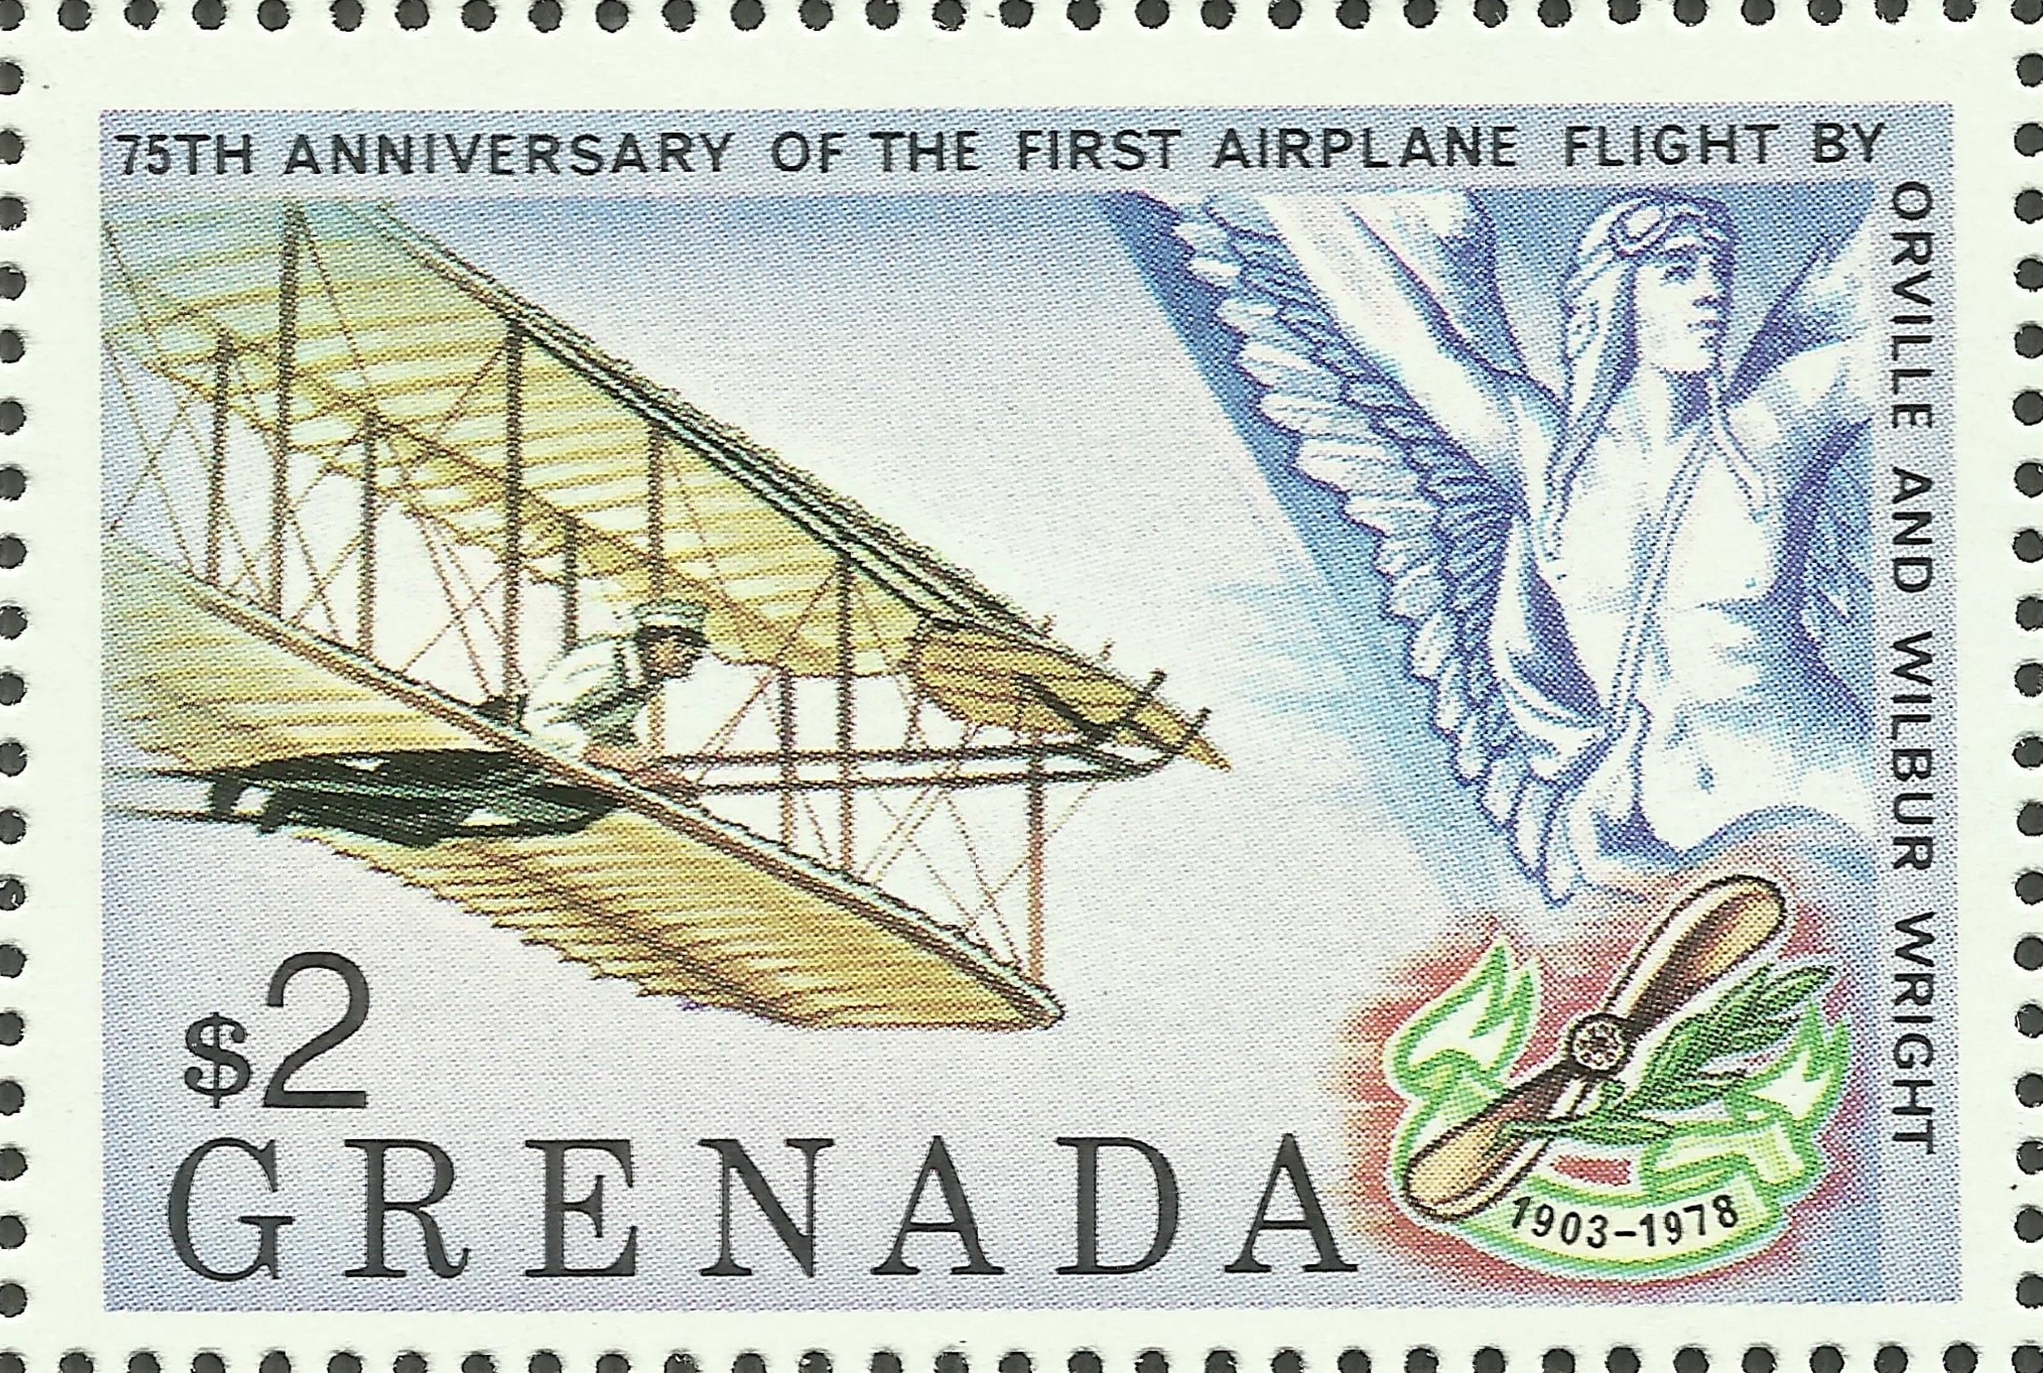 Grenada - Scott #894 (1978) - digitally cropped from souvenir sheet